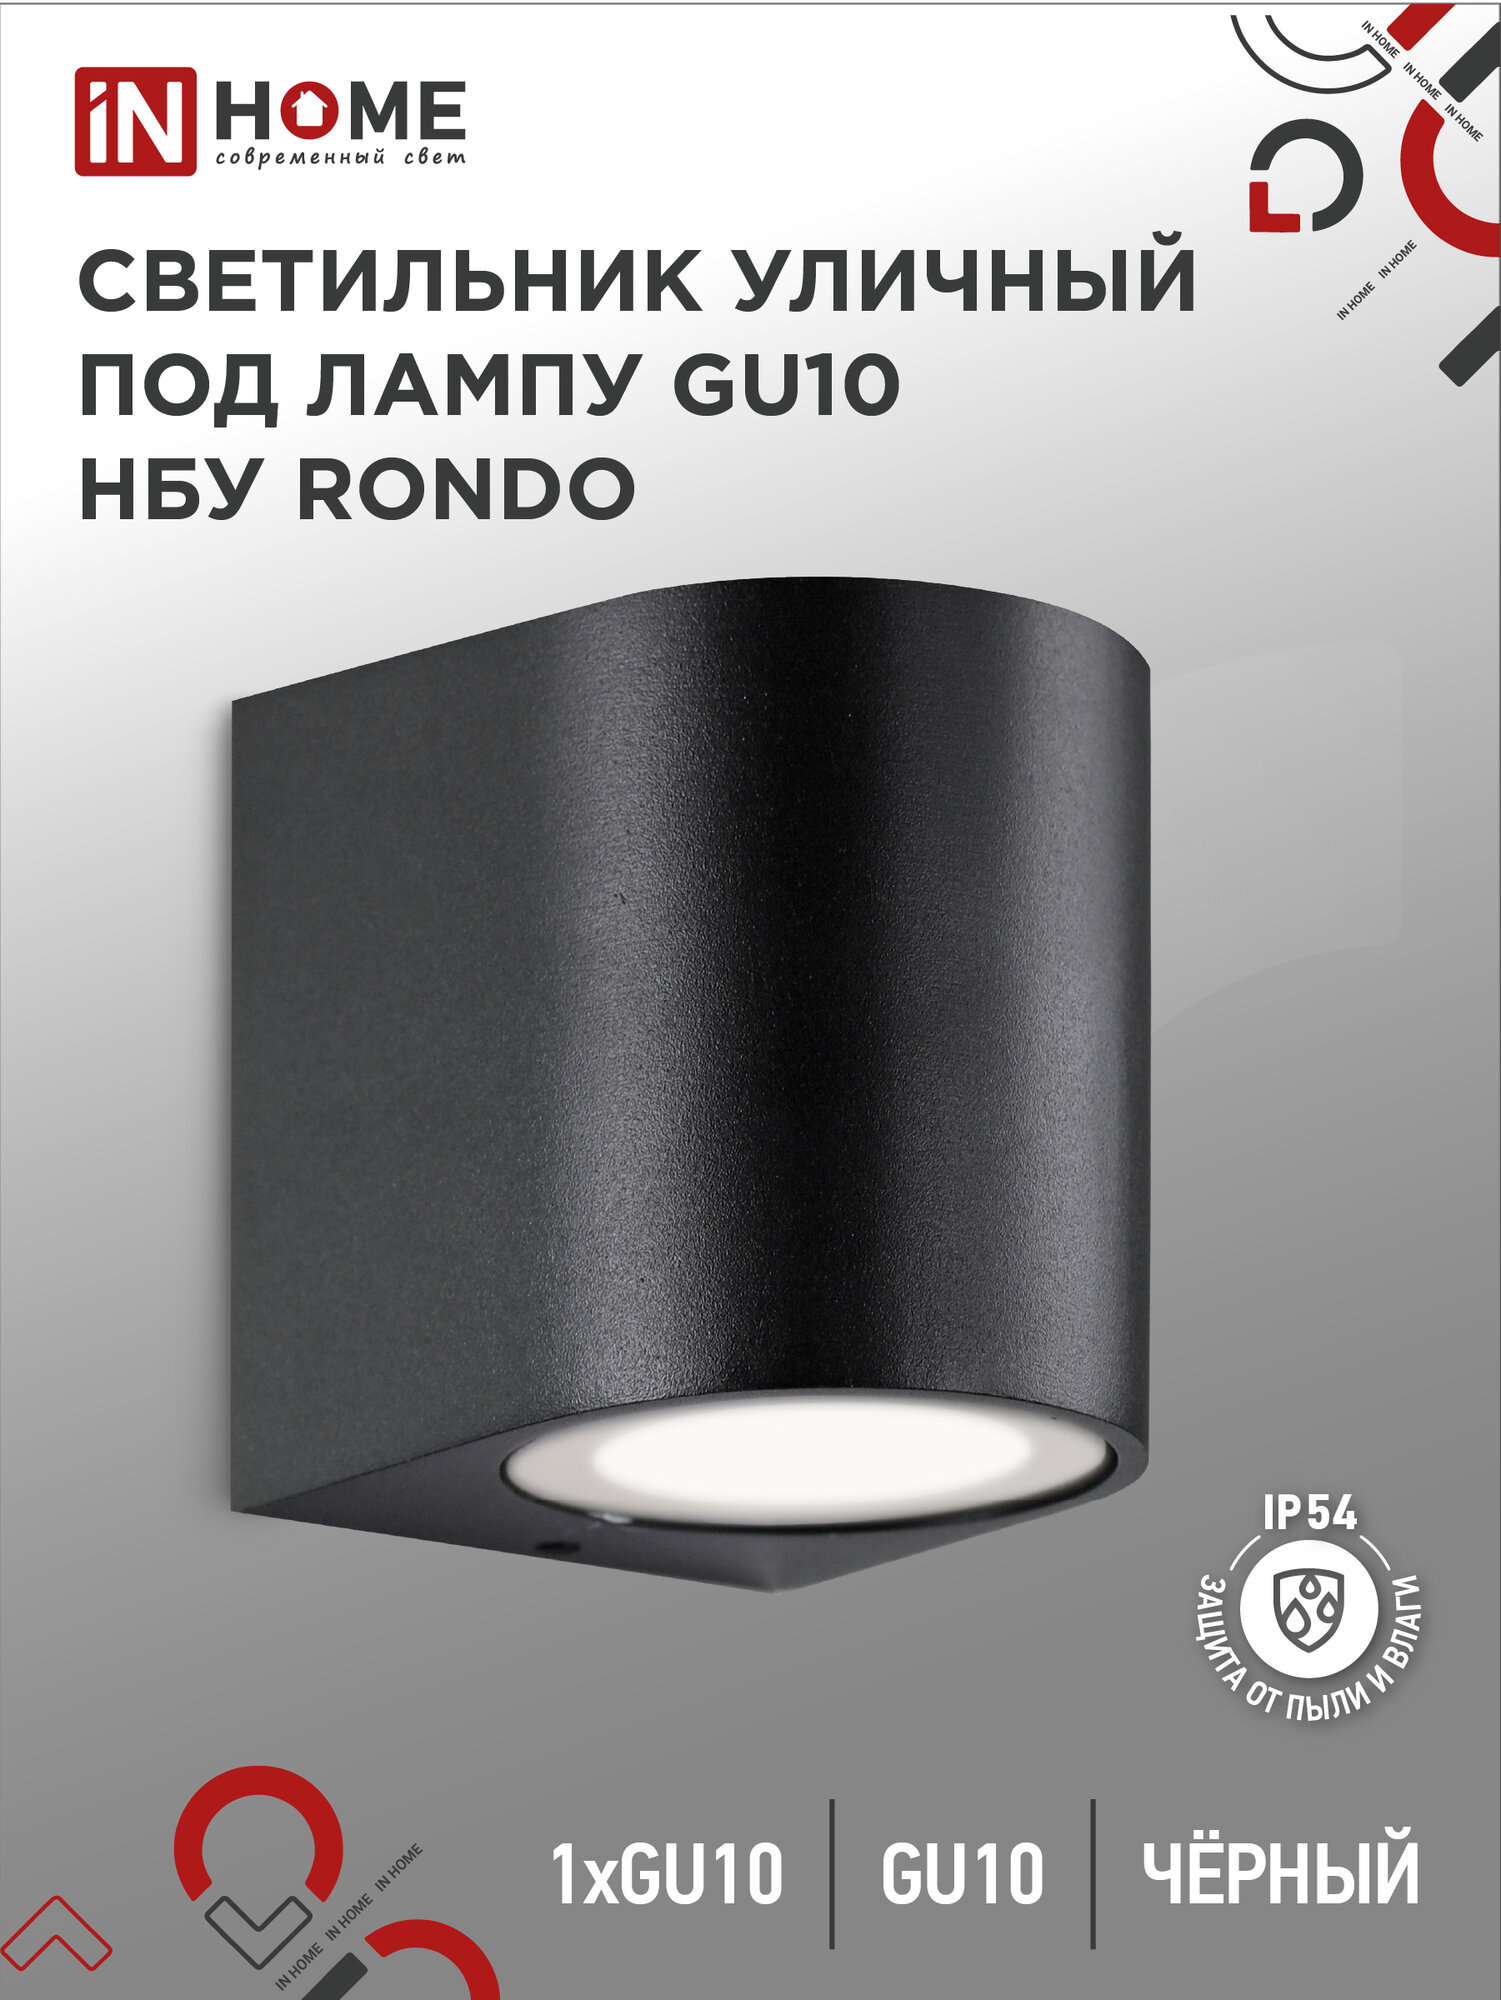 Светильник уличный настенный фасадный архитектурный НБУ RONDO-1хGU10-BL алюм под 1хGU10 230B черный IP54 IN HOME